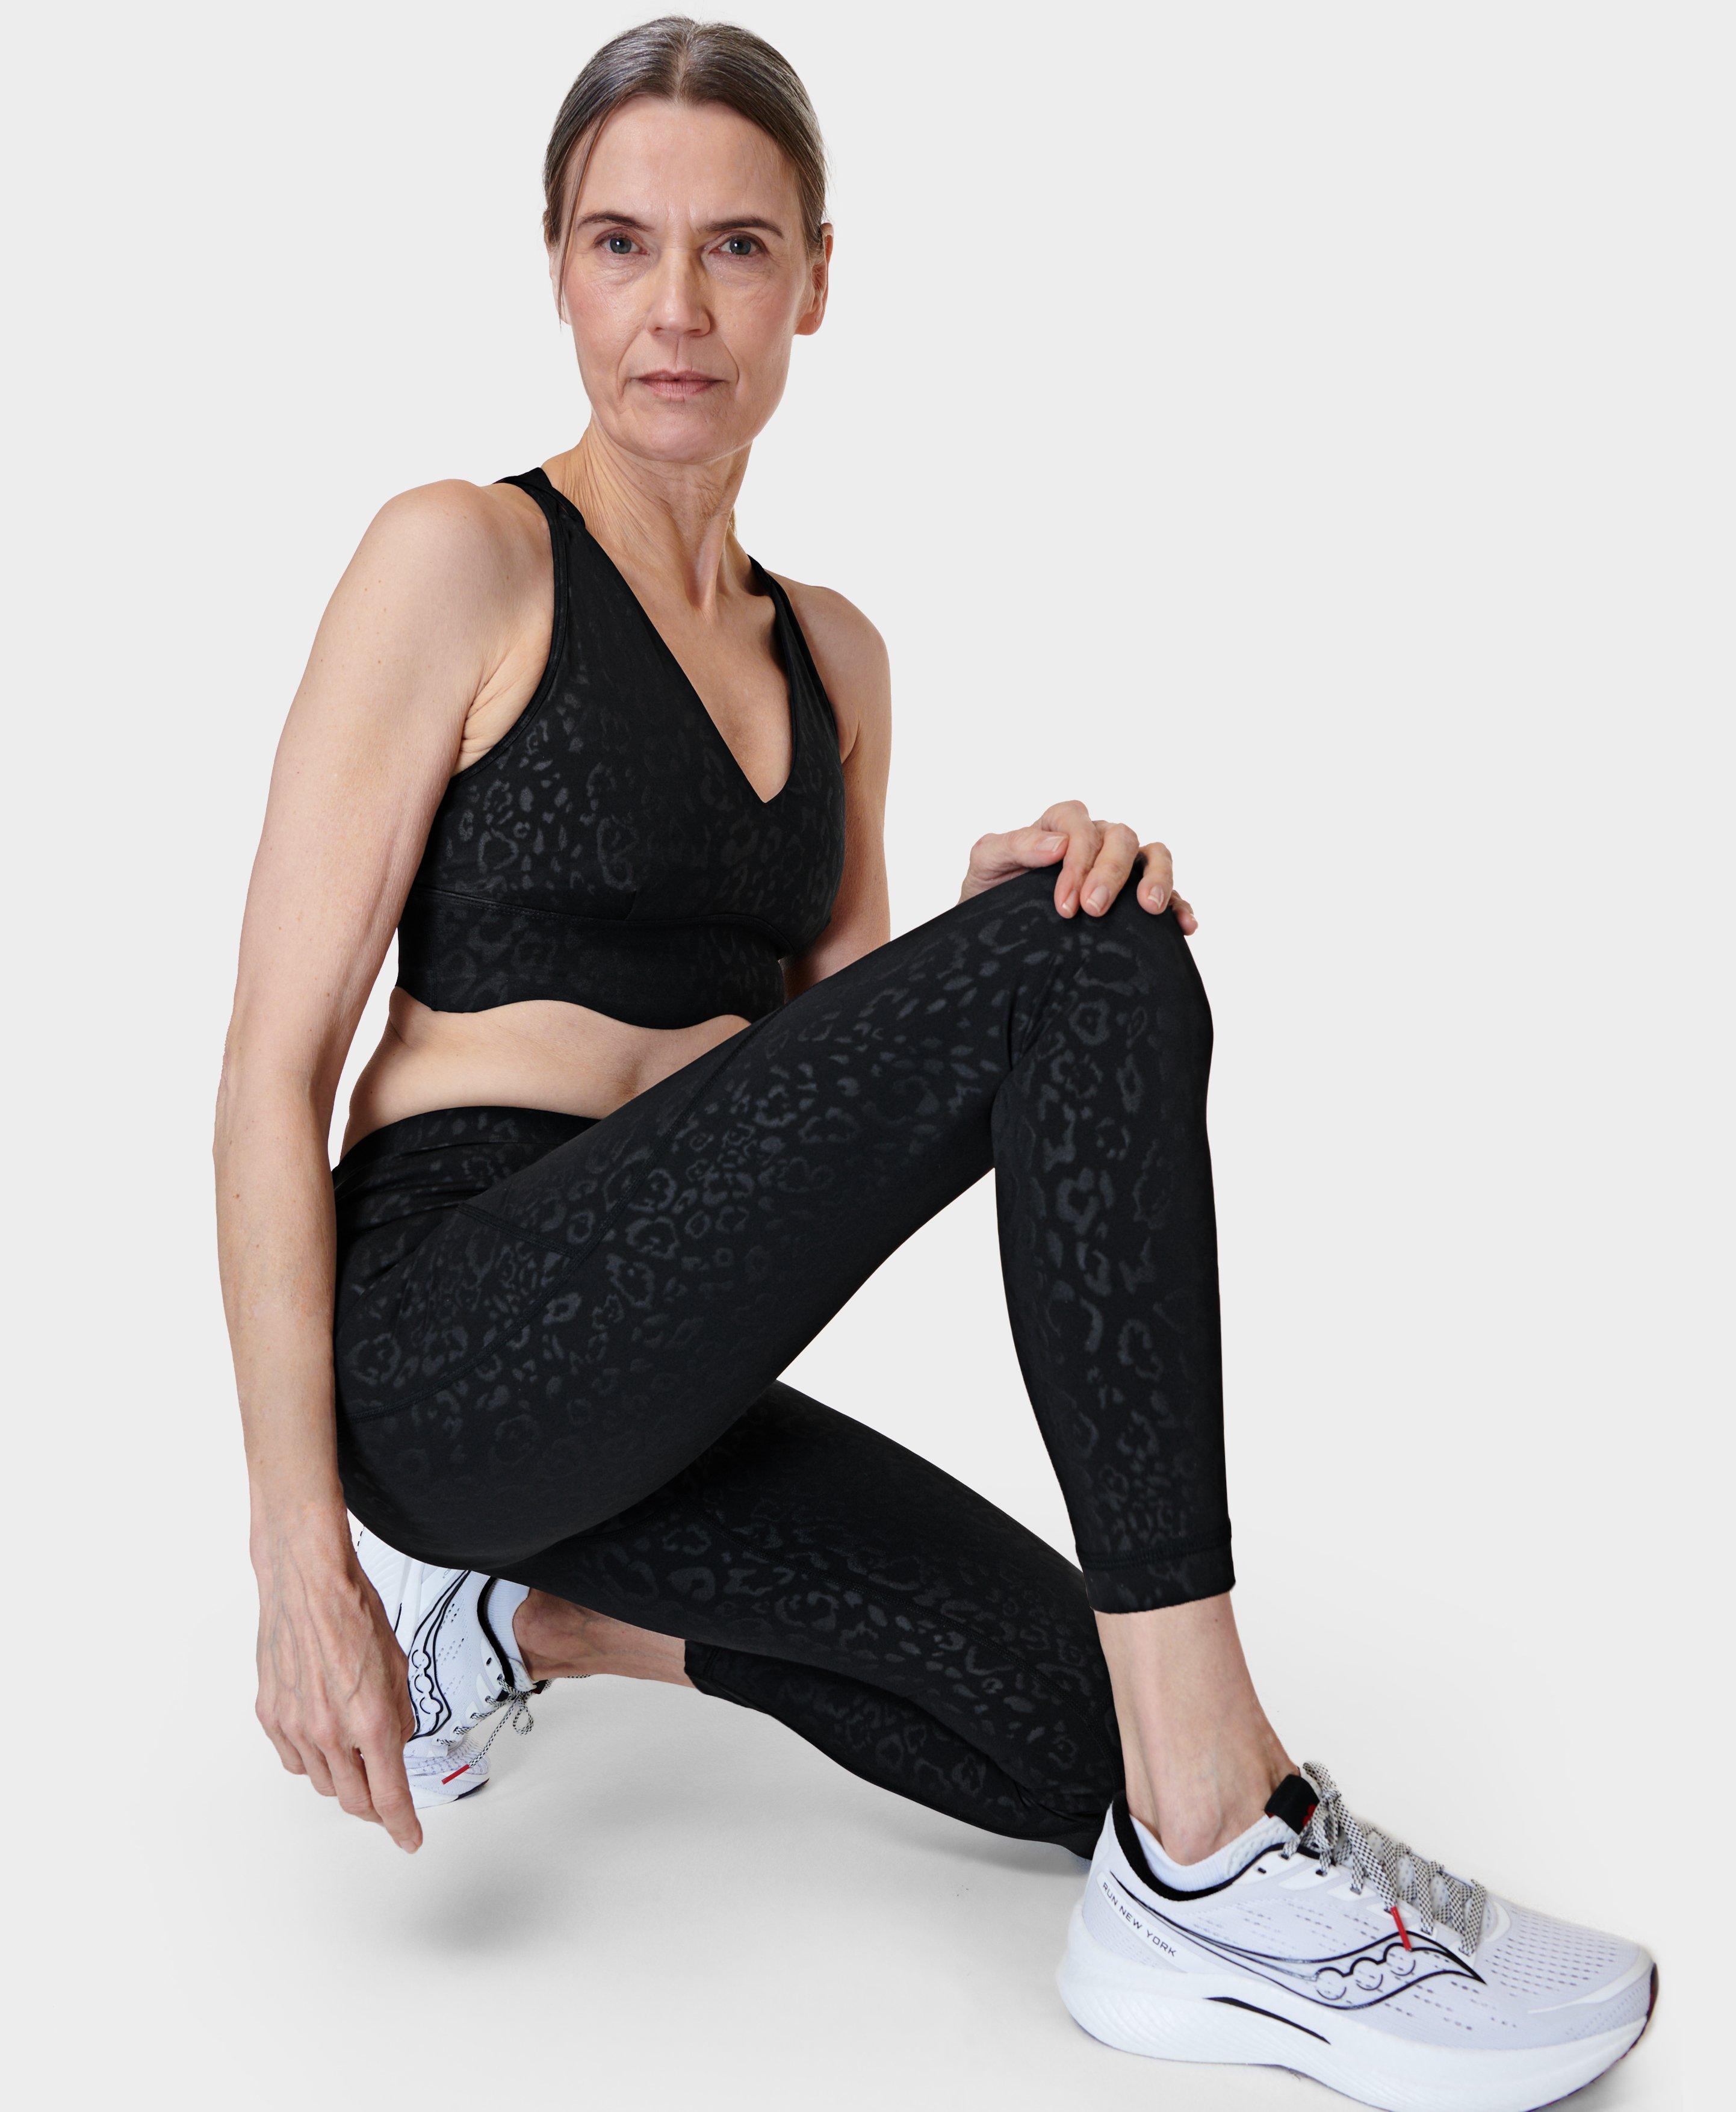 Buy aliveGOT Leopard Print Yoga Pants High Waist Workout Leggings Capris  For Women at Amazon.in